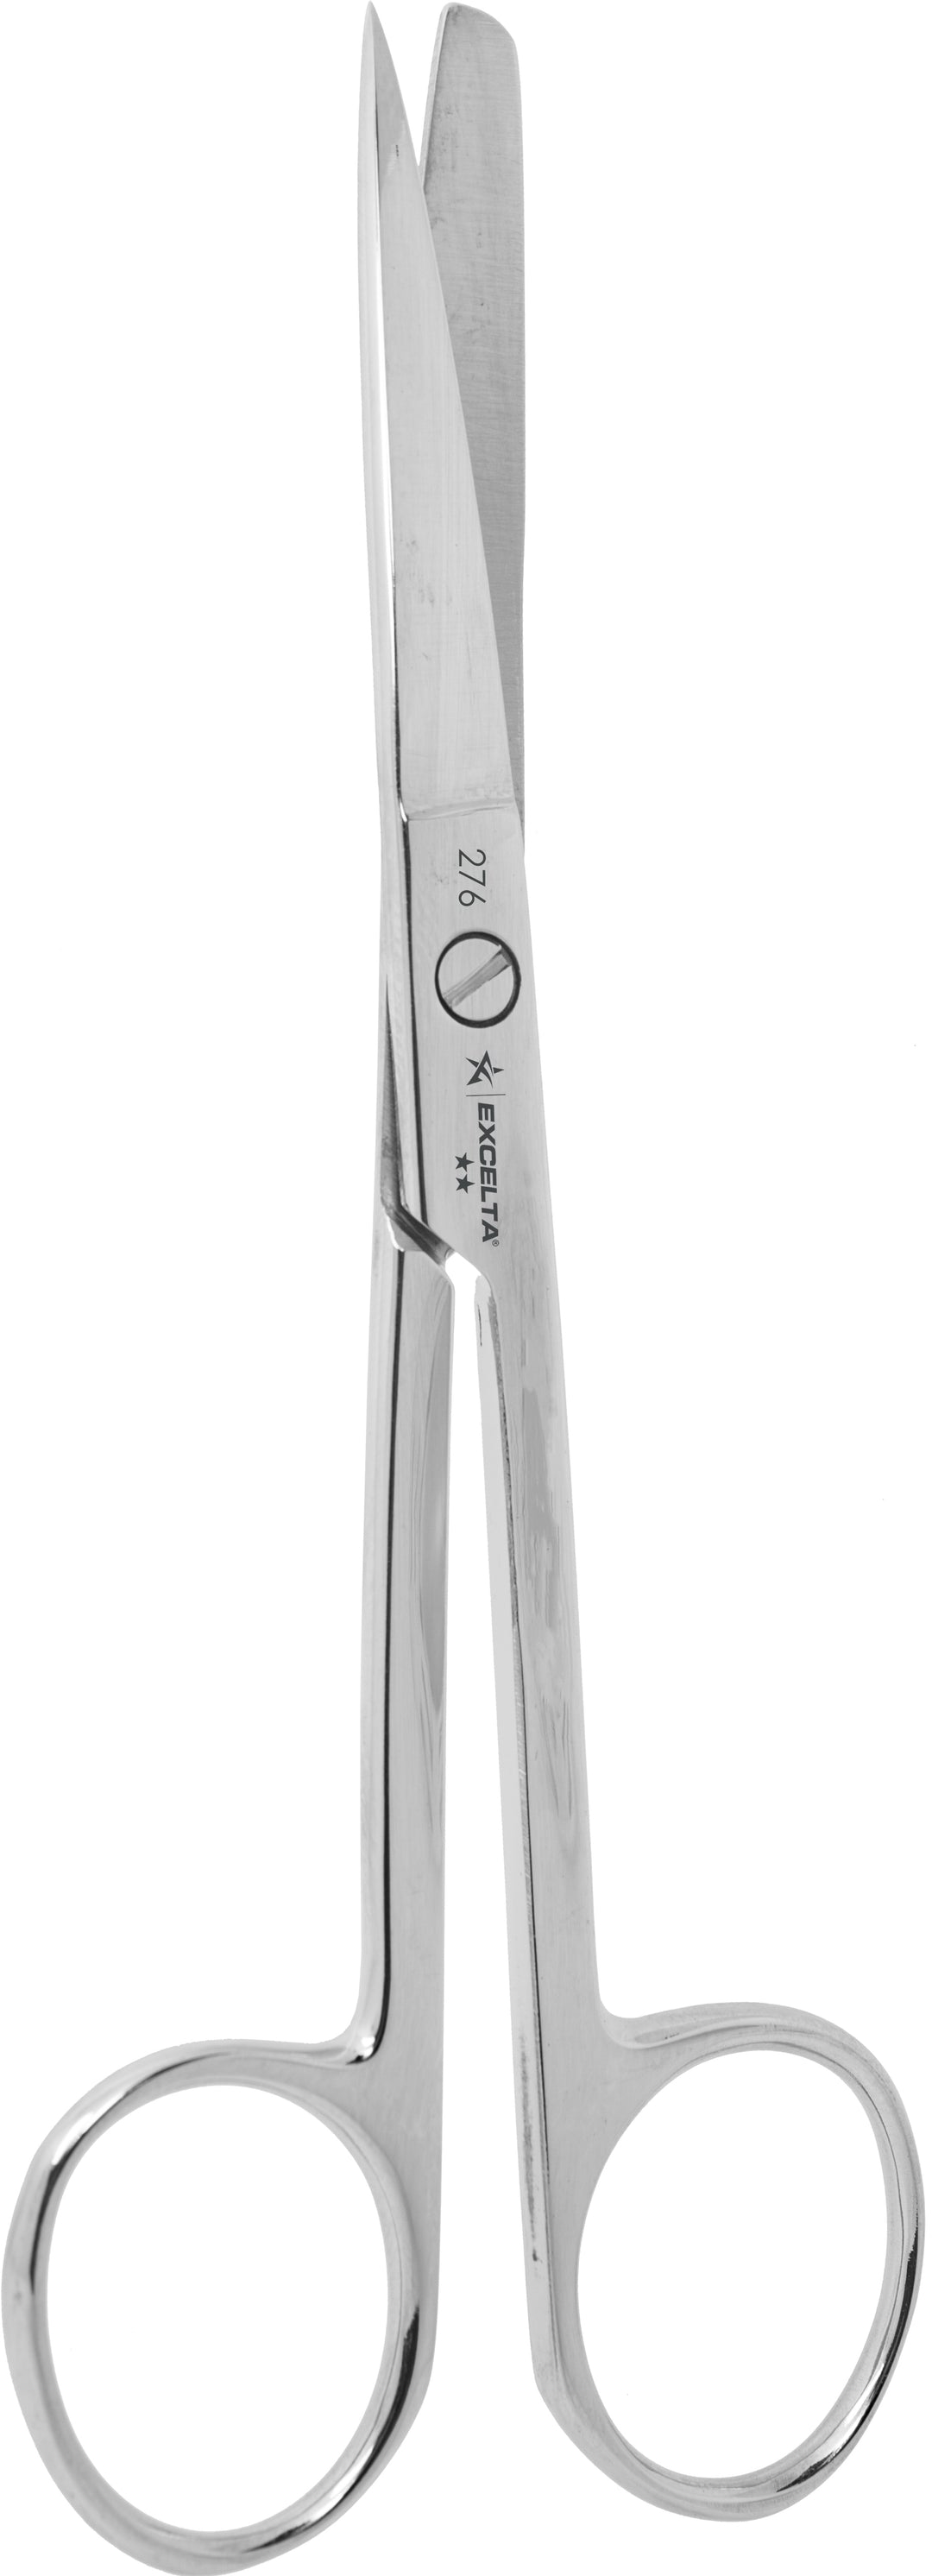 Excelta 276 Scissors - Fine 1.25" Blade - SS - Oal 5.56" - One Blunt Blade